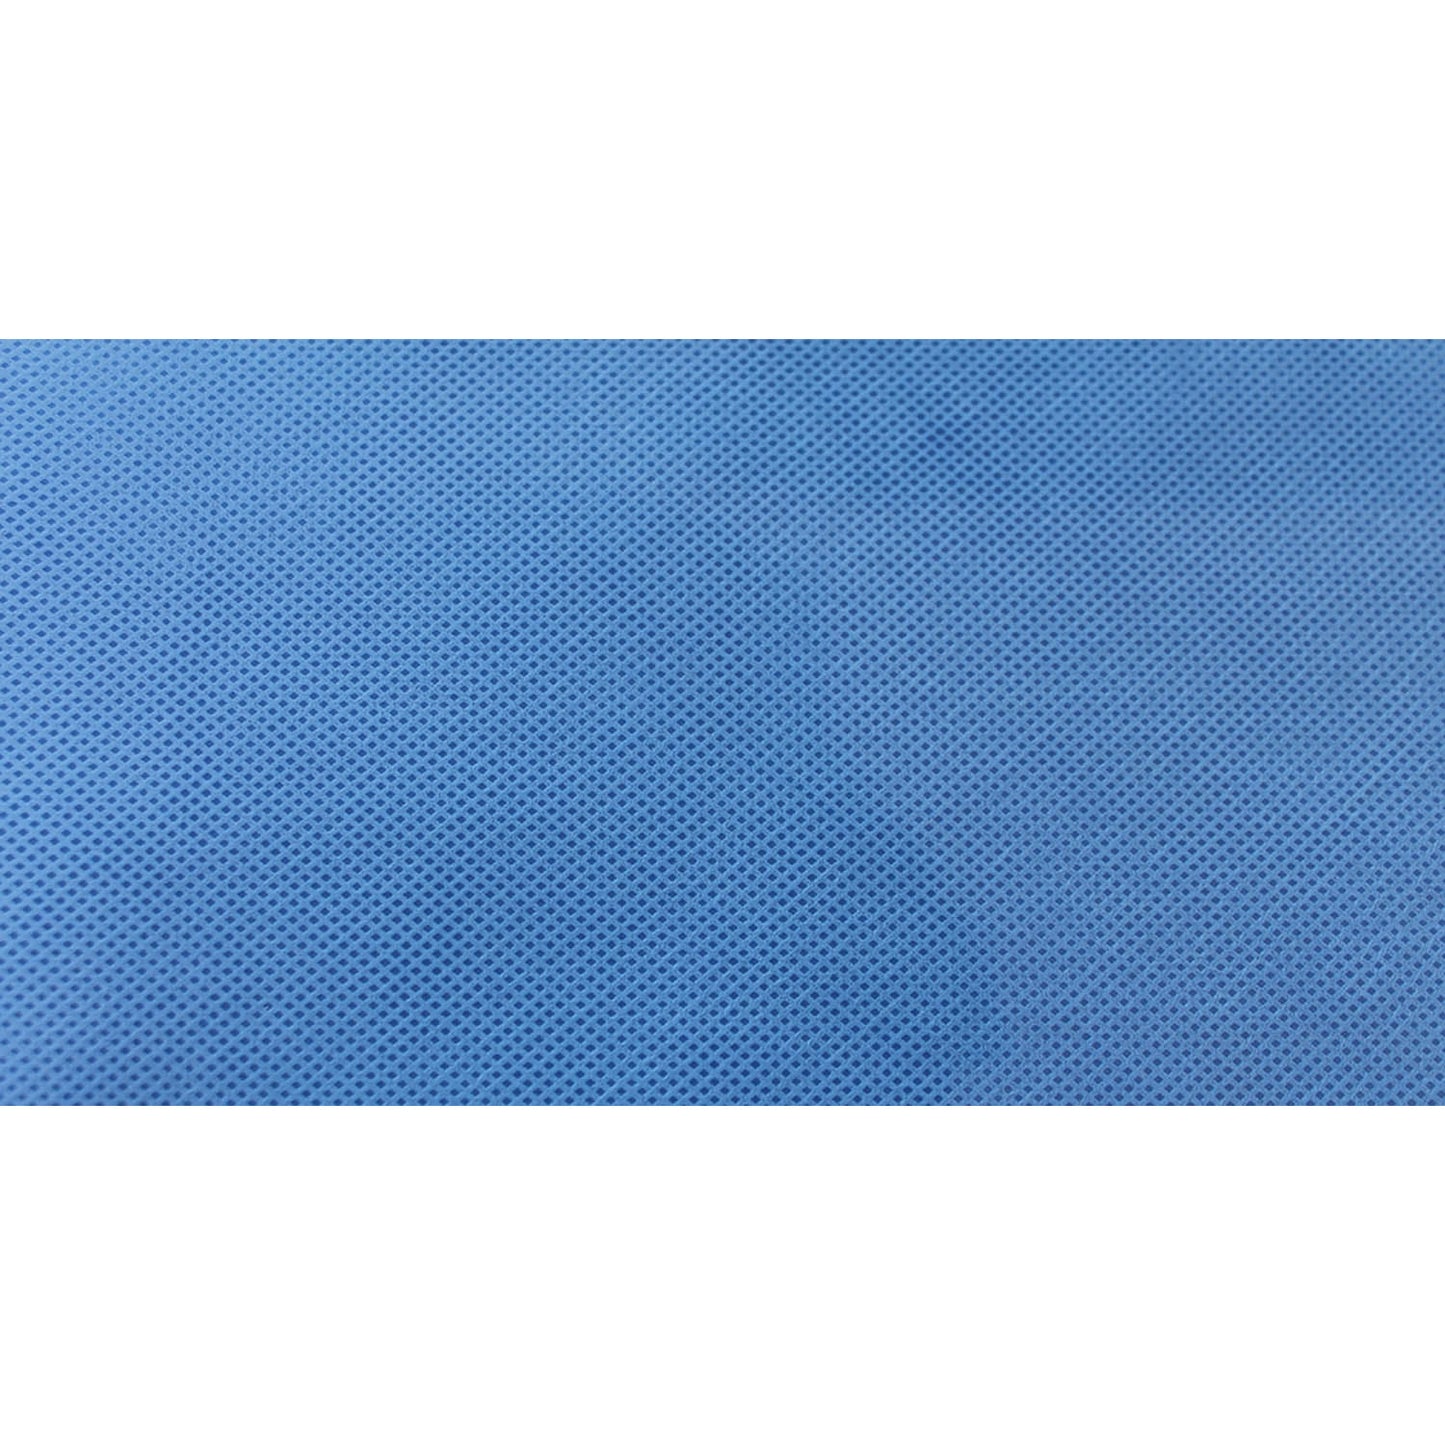 Marlux™ 7.2M x 1.95M Univ Anti-Bac Curtains - Single